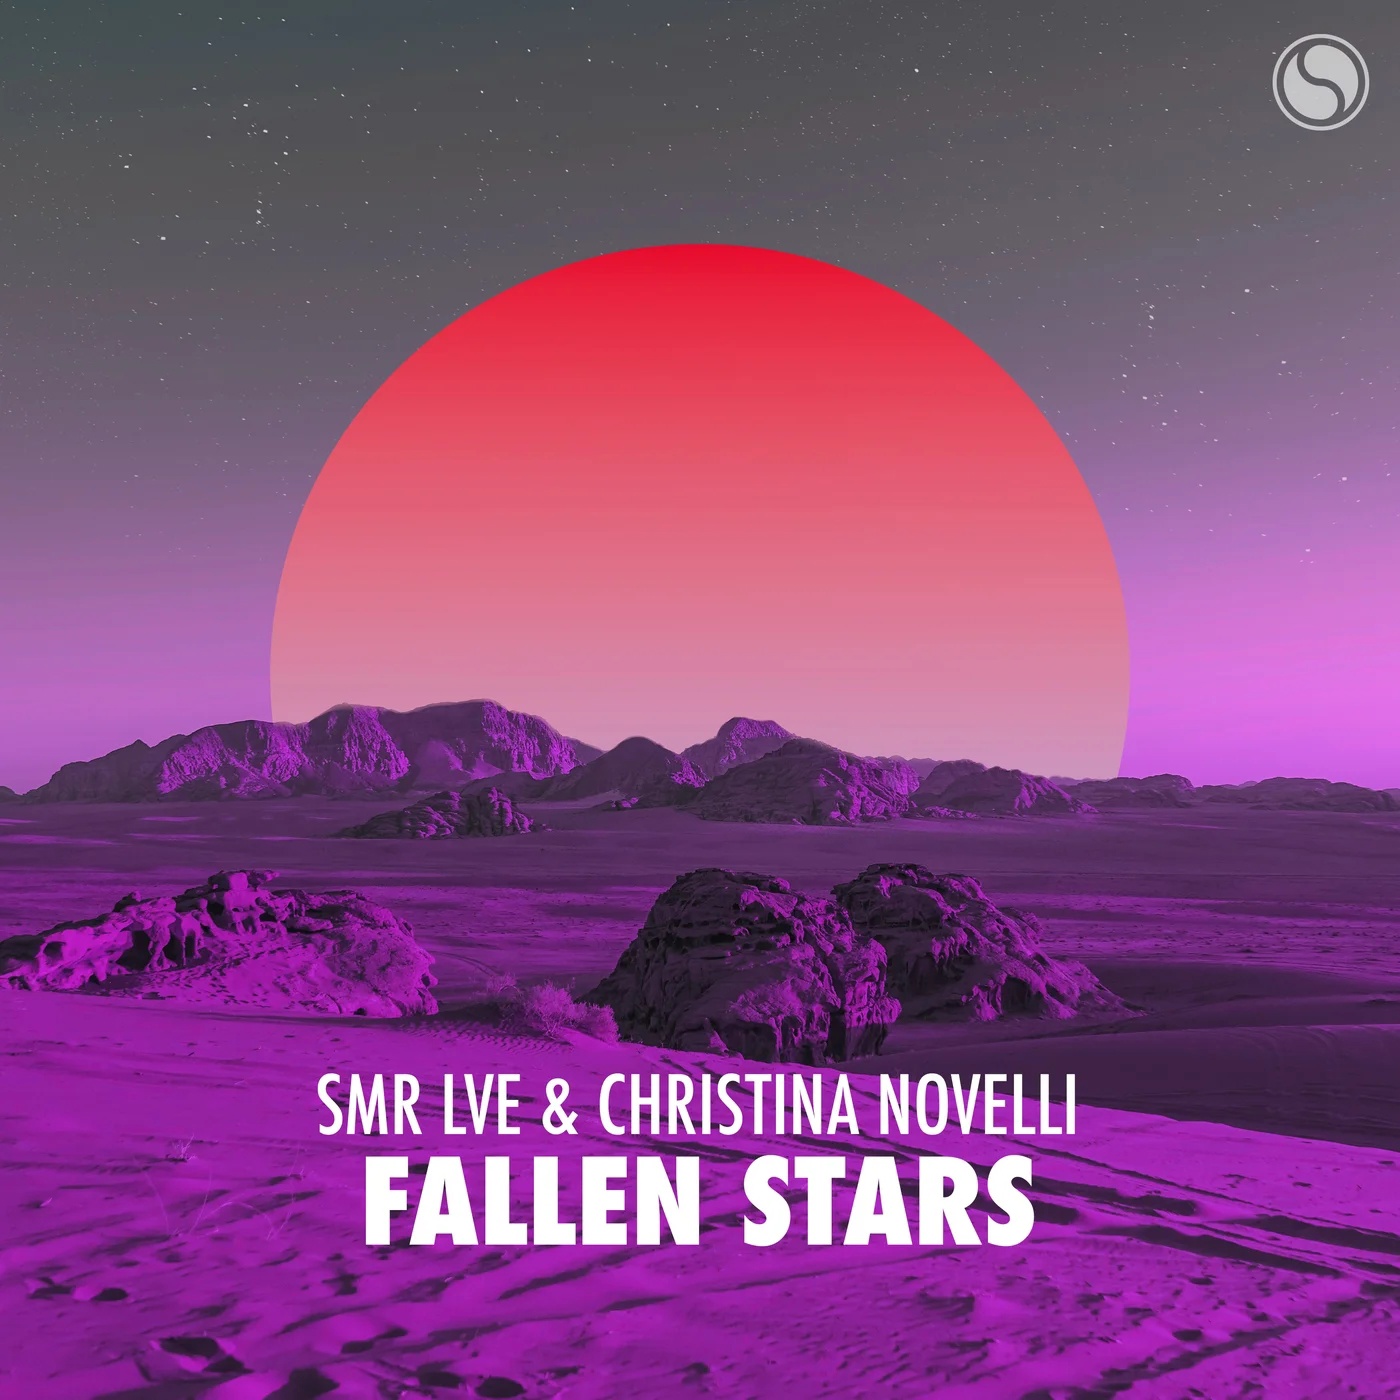 Christina Novelli & SMR LVE - Fallen Stars (Extended Mix)